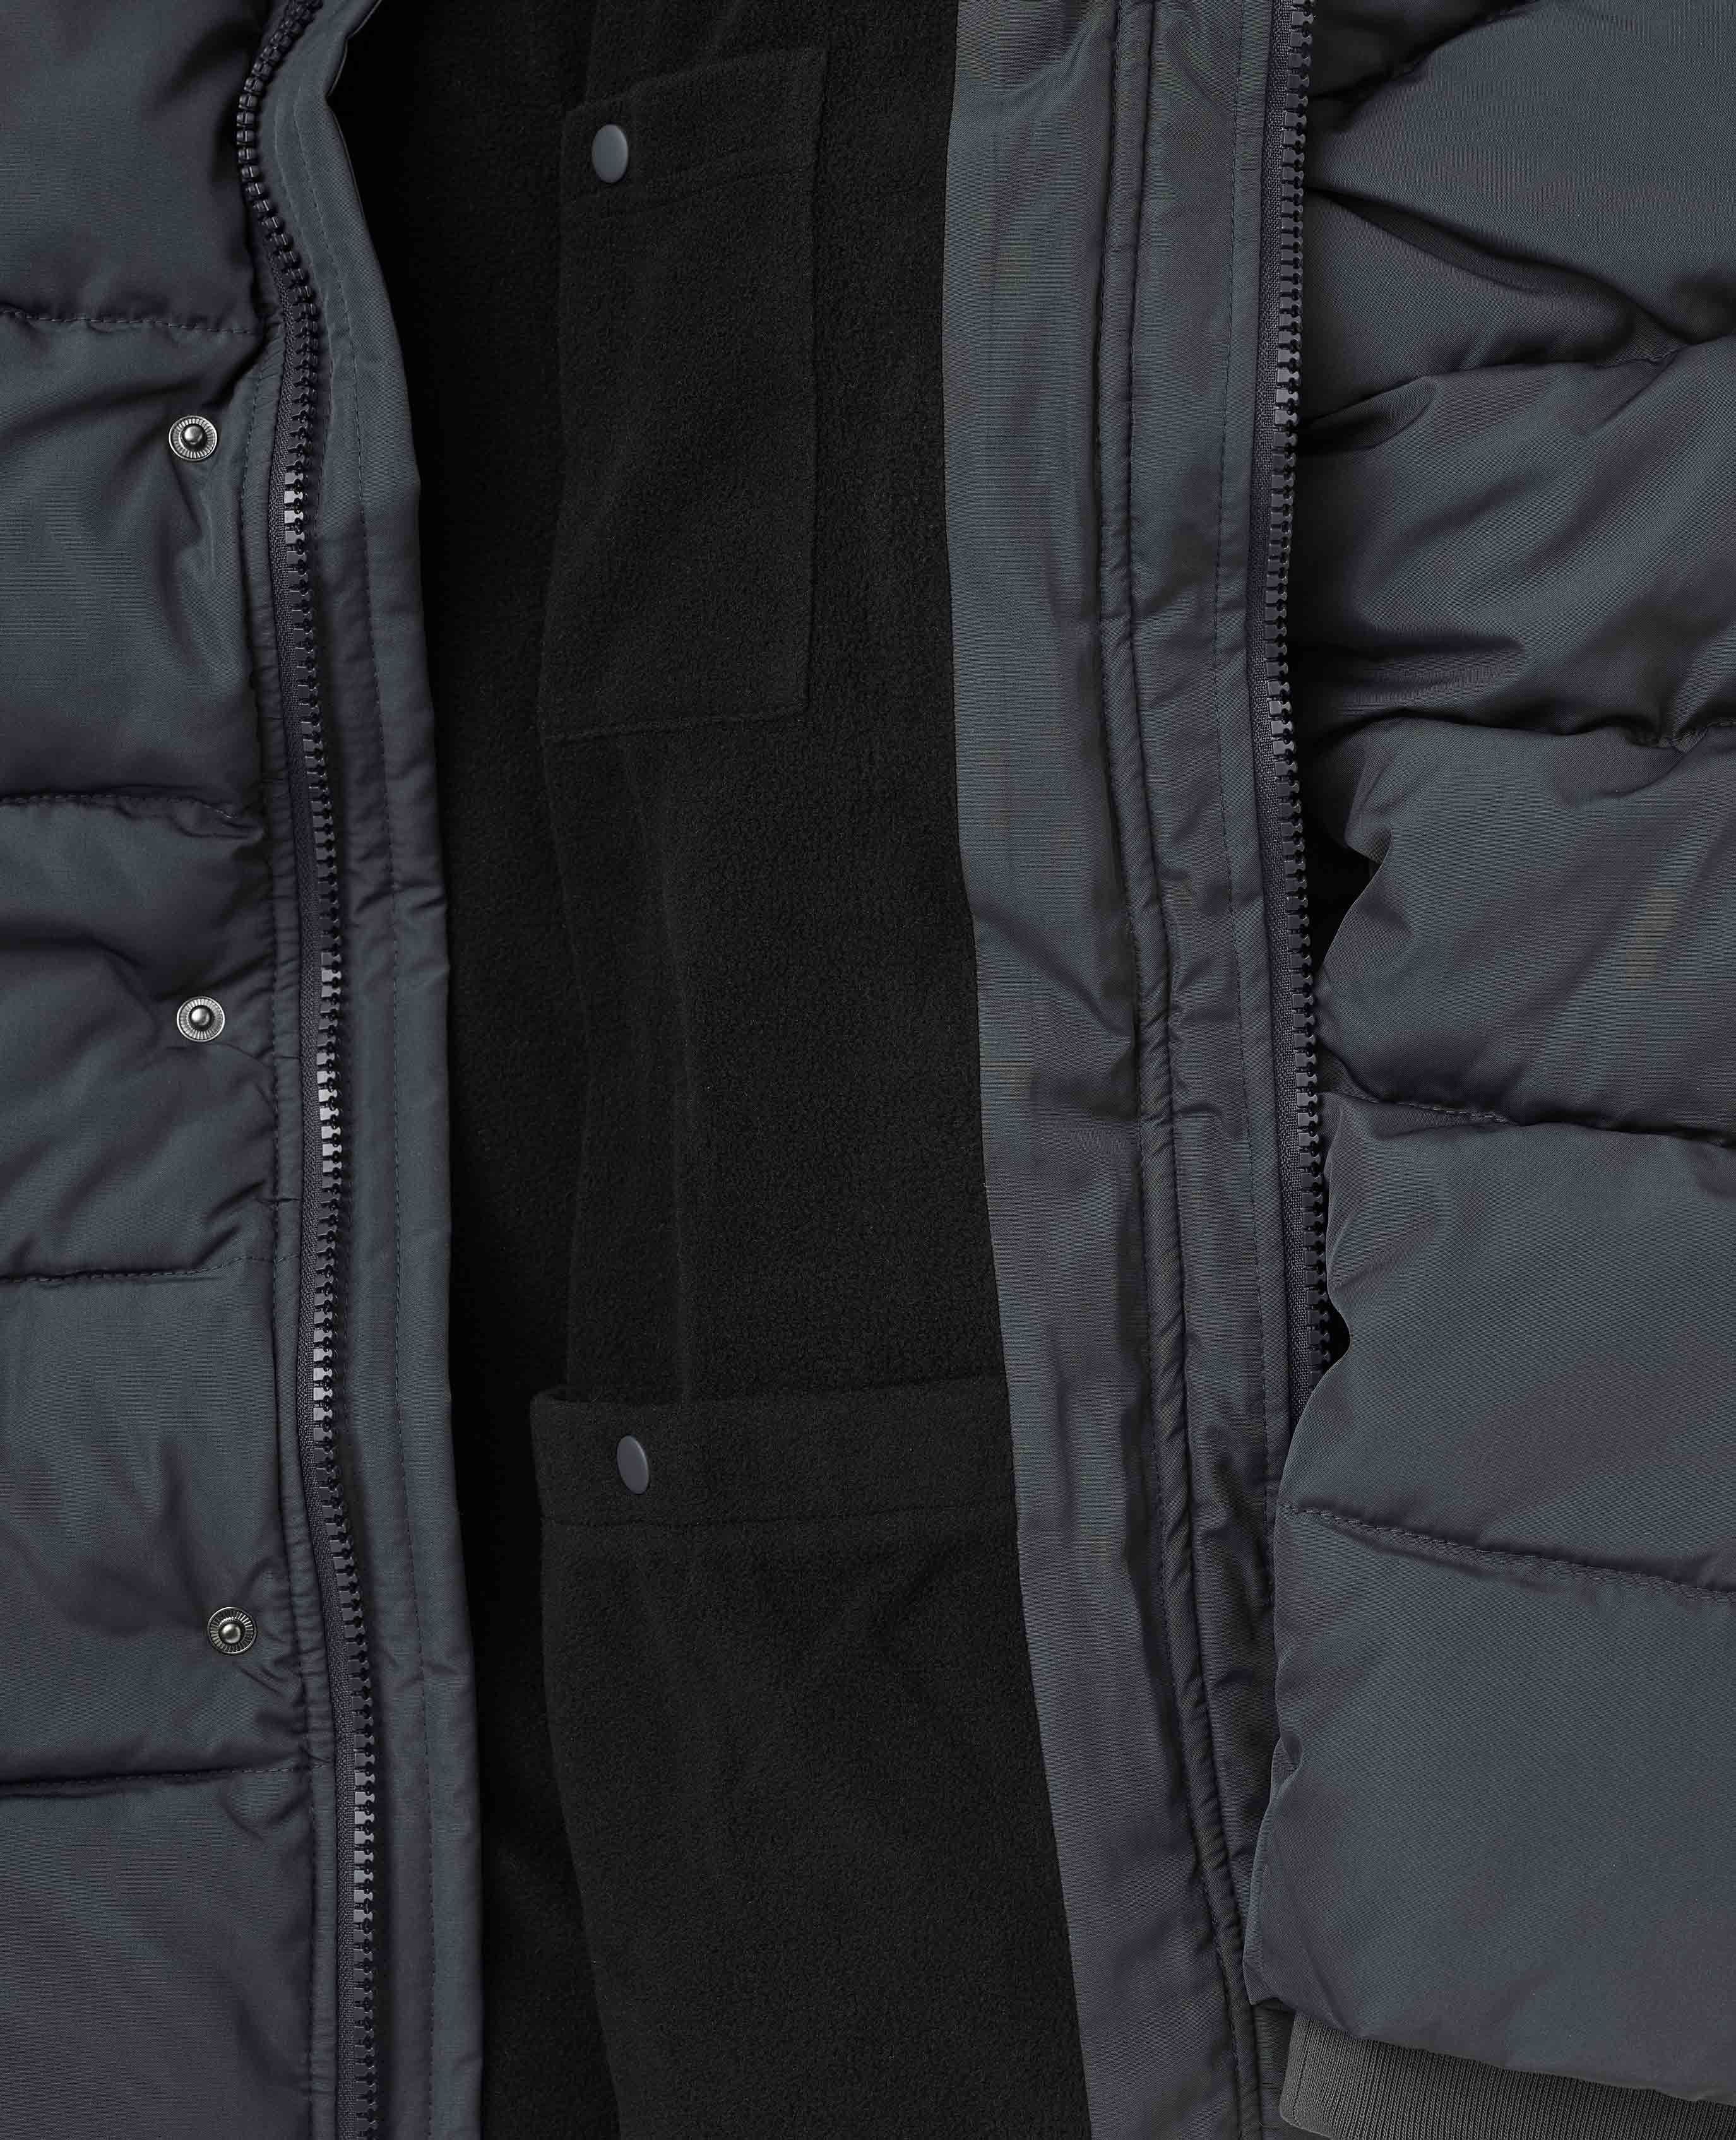 Men’s 100% Recycled Puffer Jacket in Dark Grey | Savile Row Co